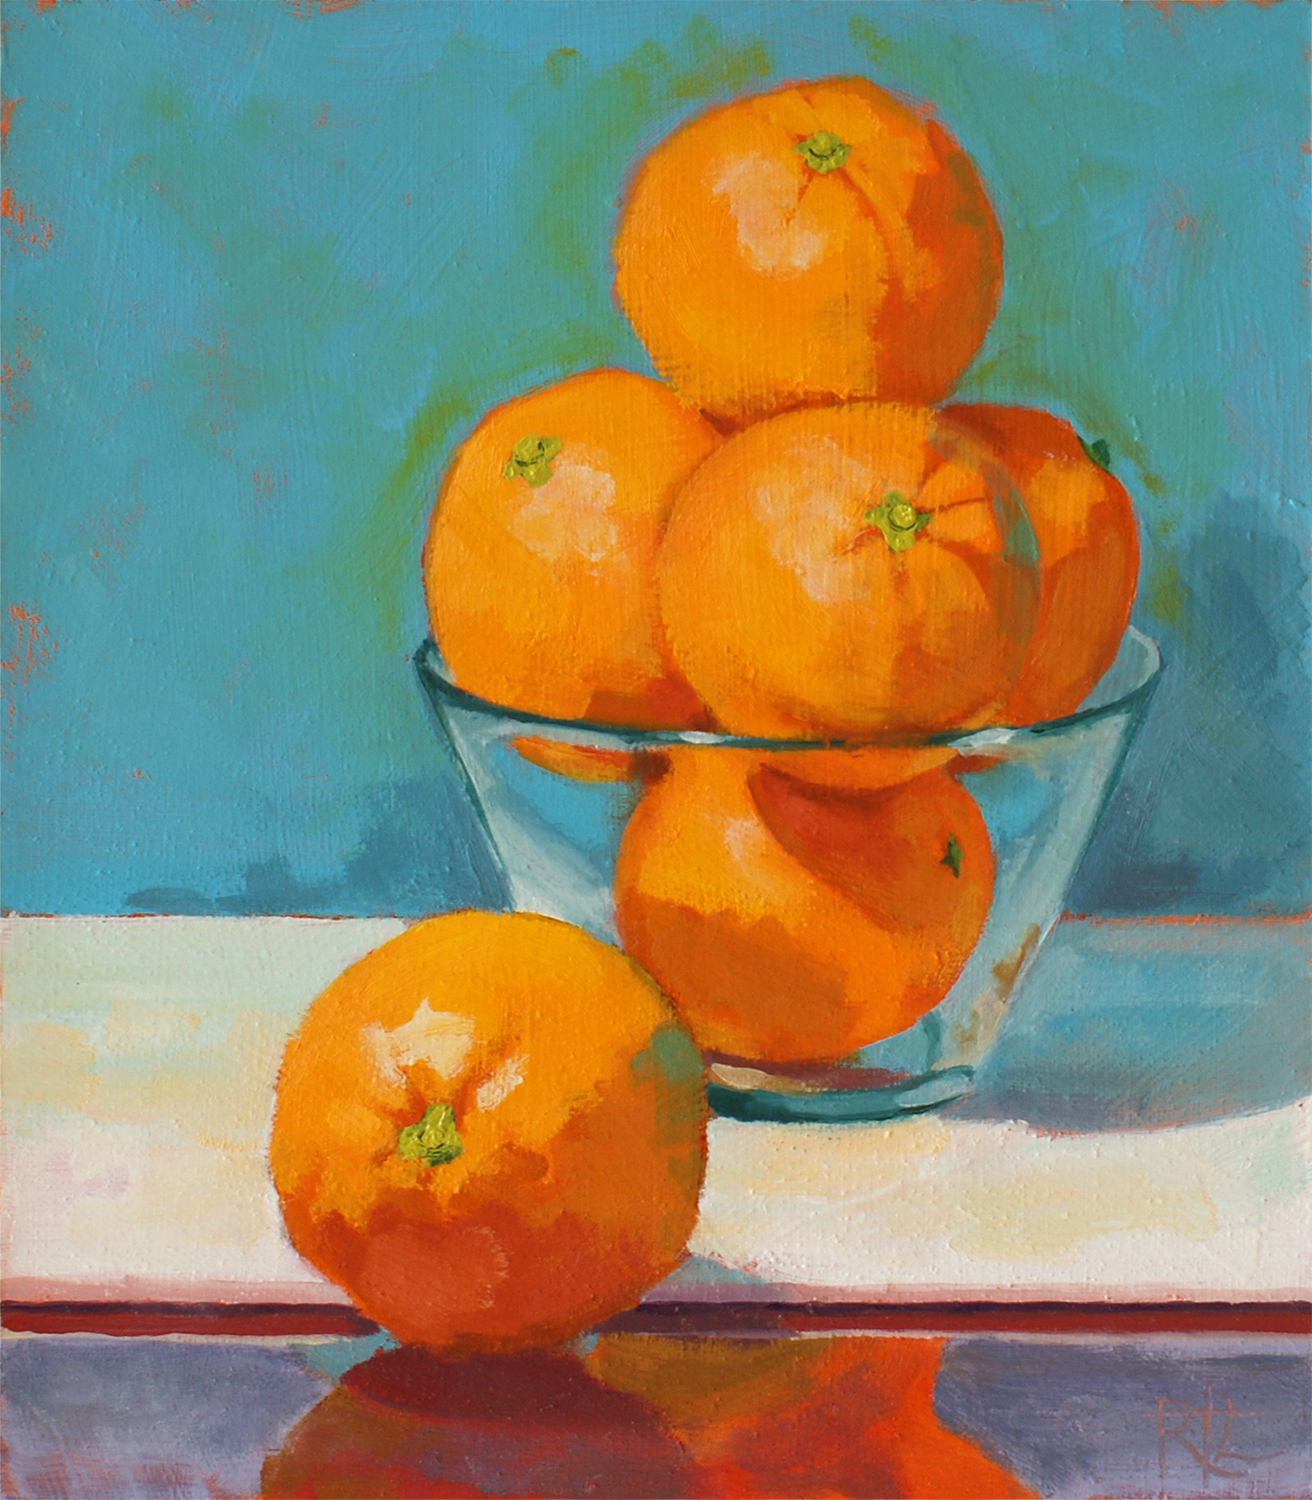 Orange Over Board by Rob Lunn.